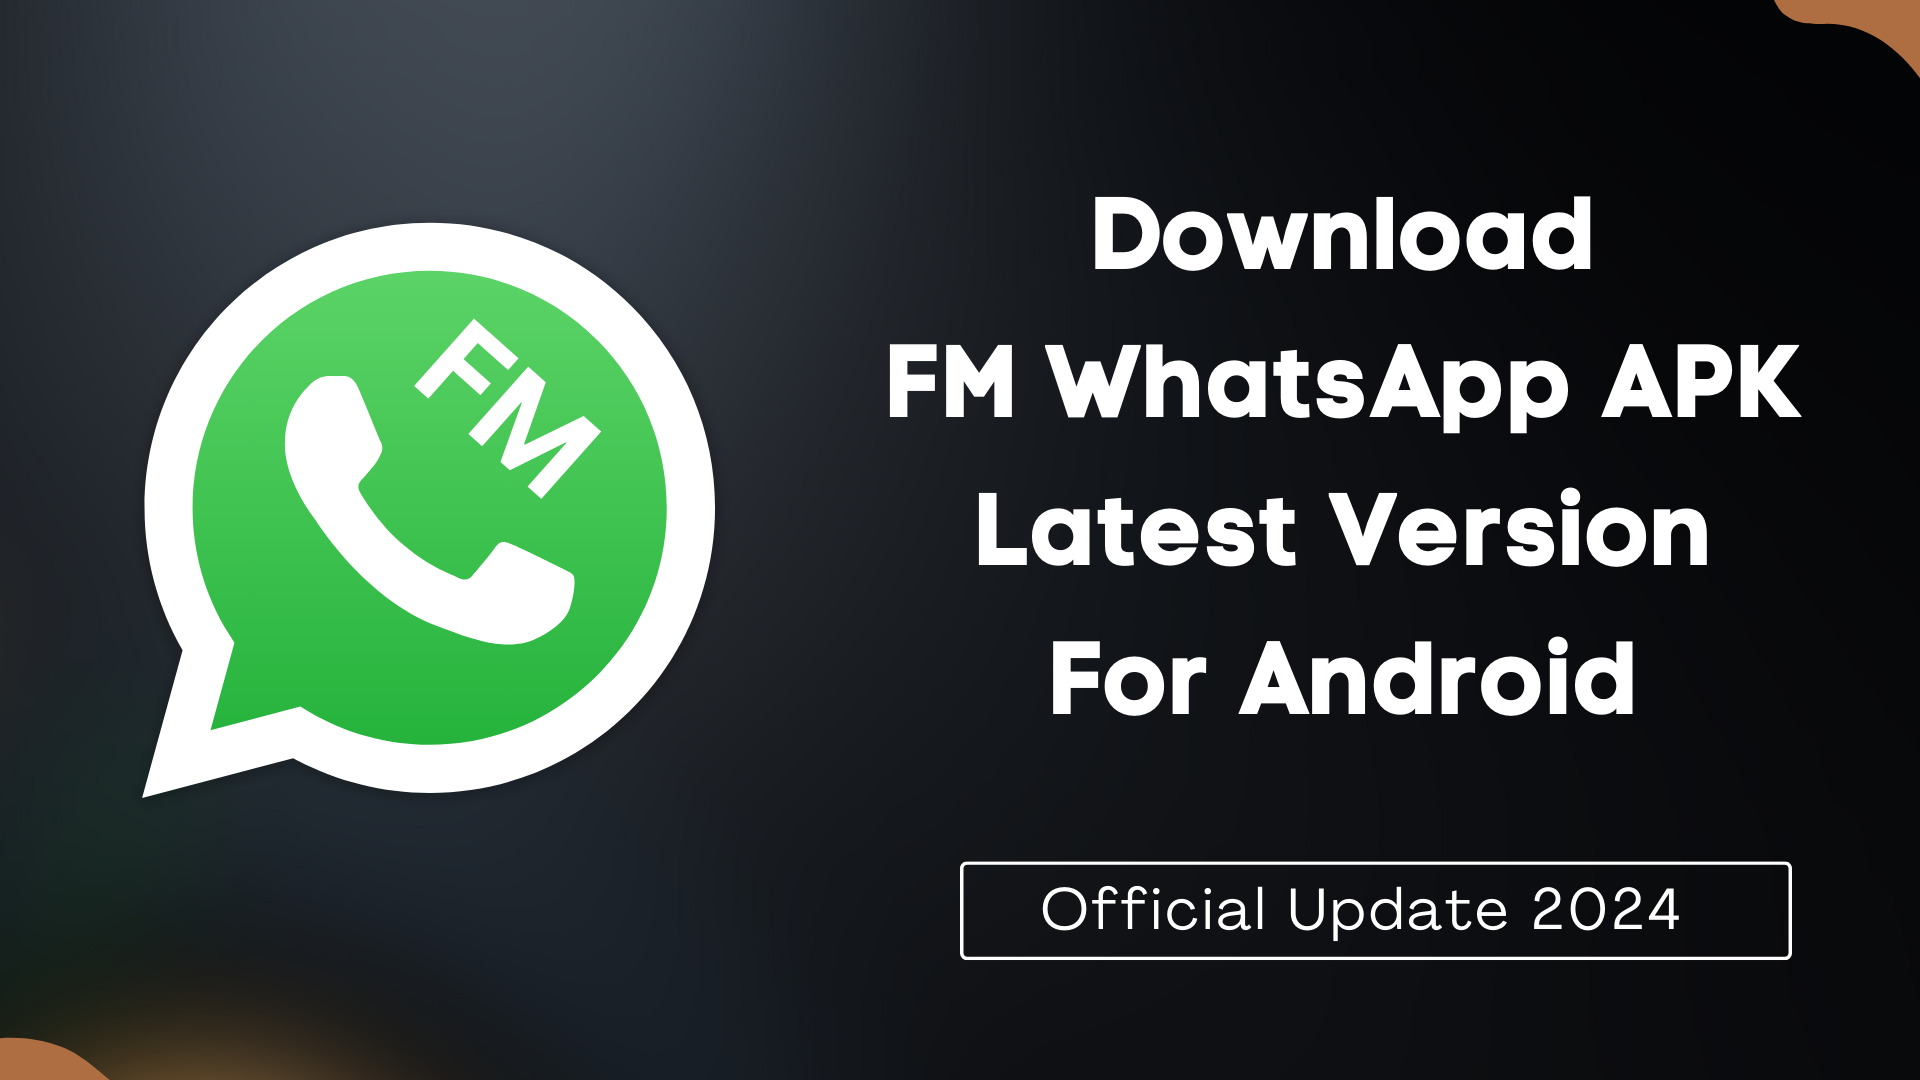 FM WhatsApp APK Featured Image 2024